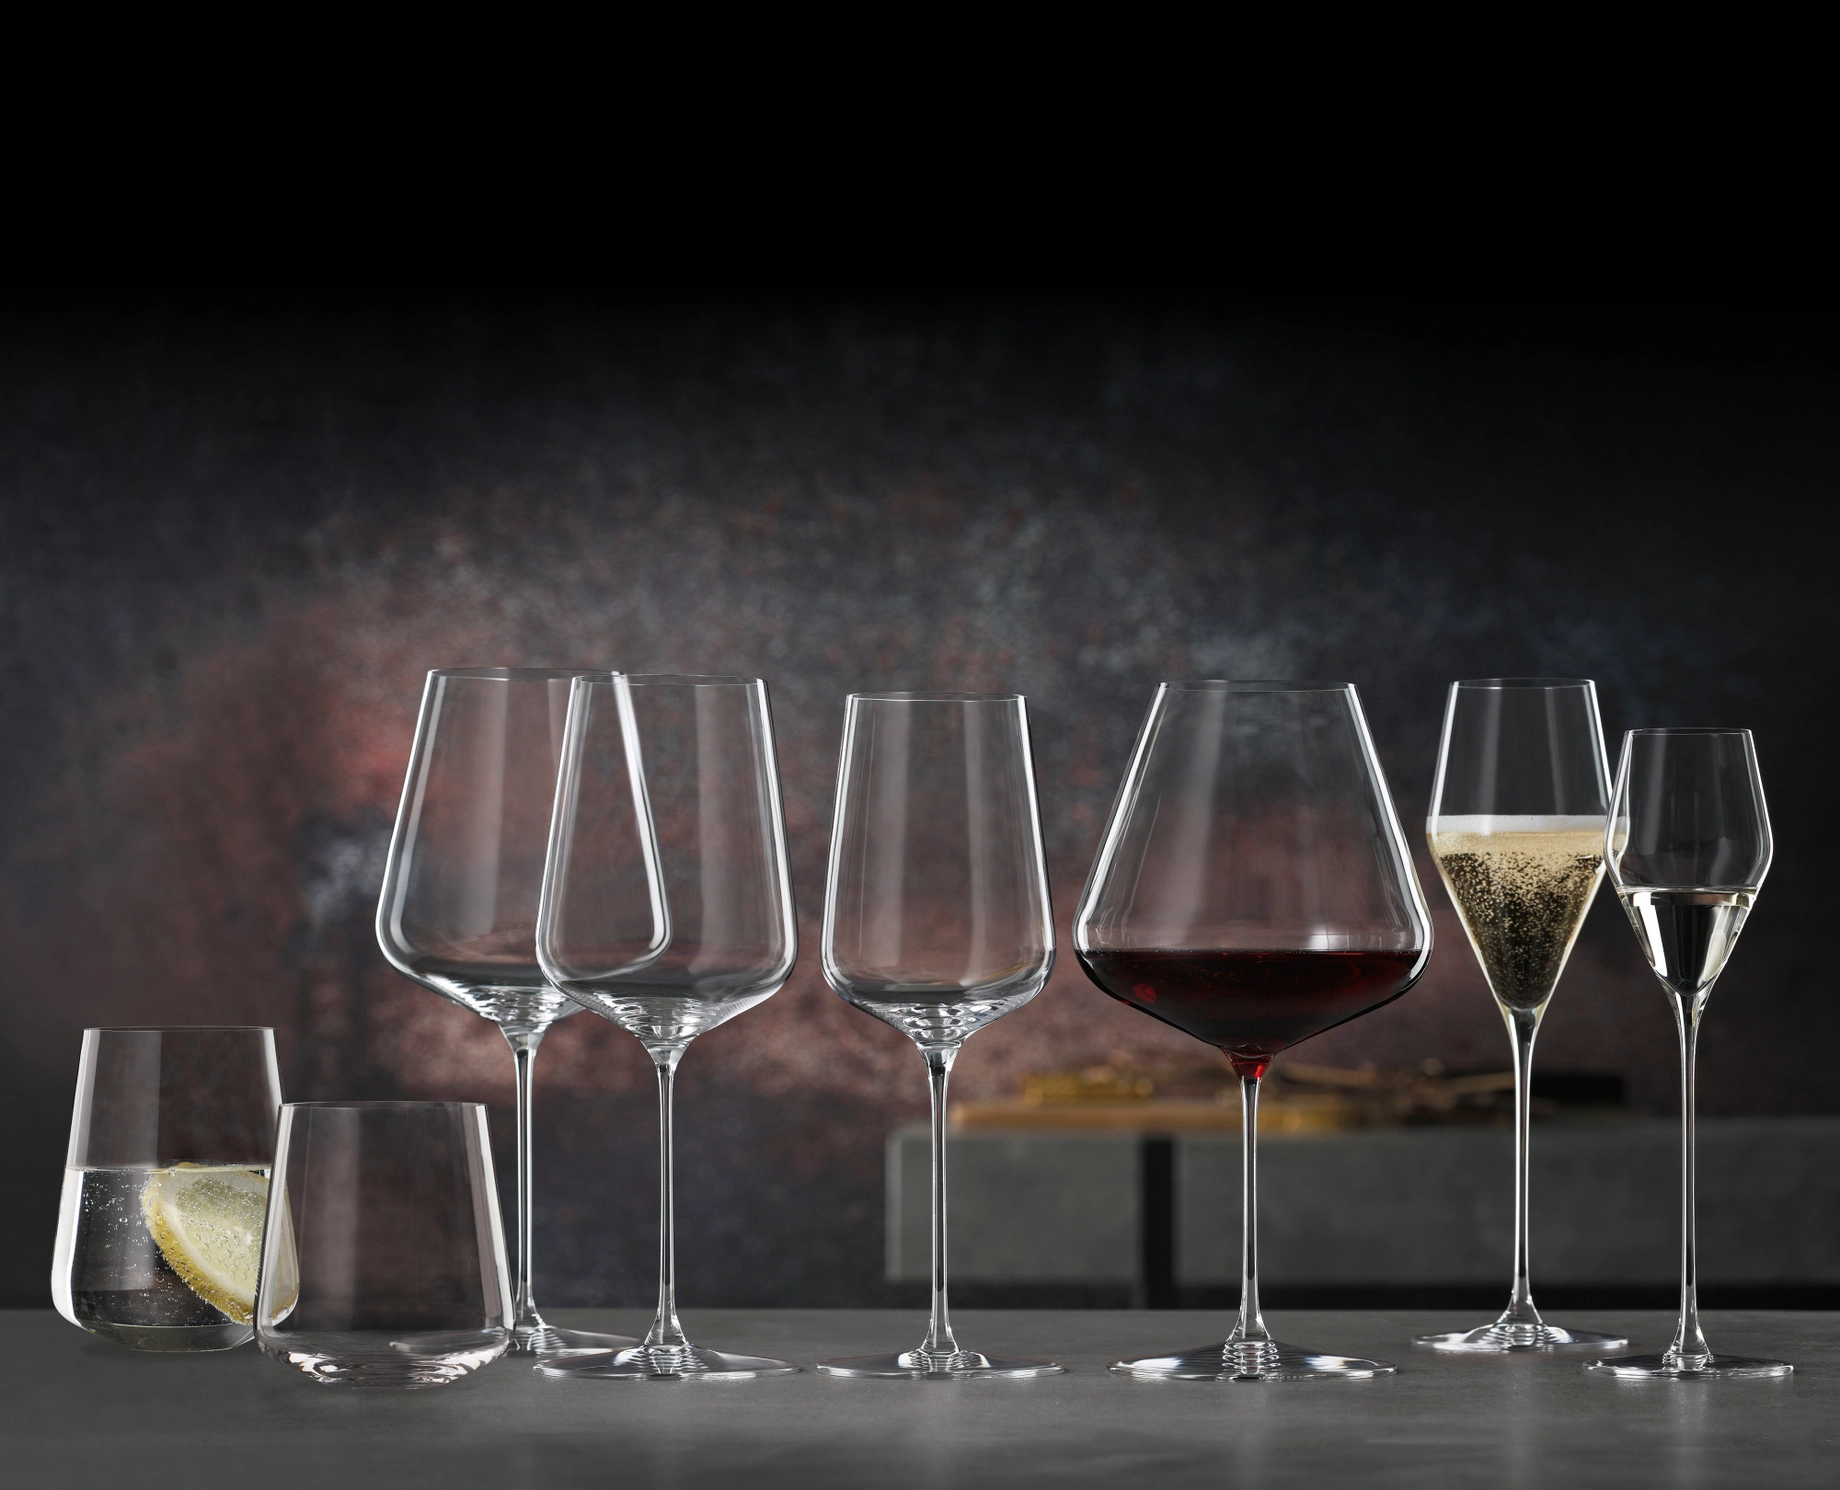 Spiegelau - Definition - Burgundy glasses - set of 6 in a gift box